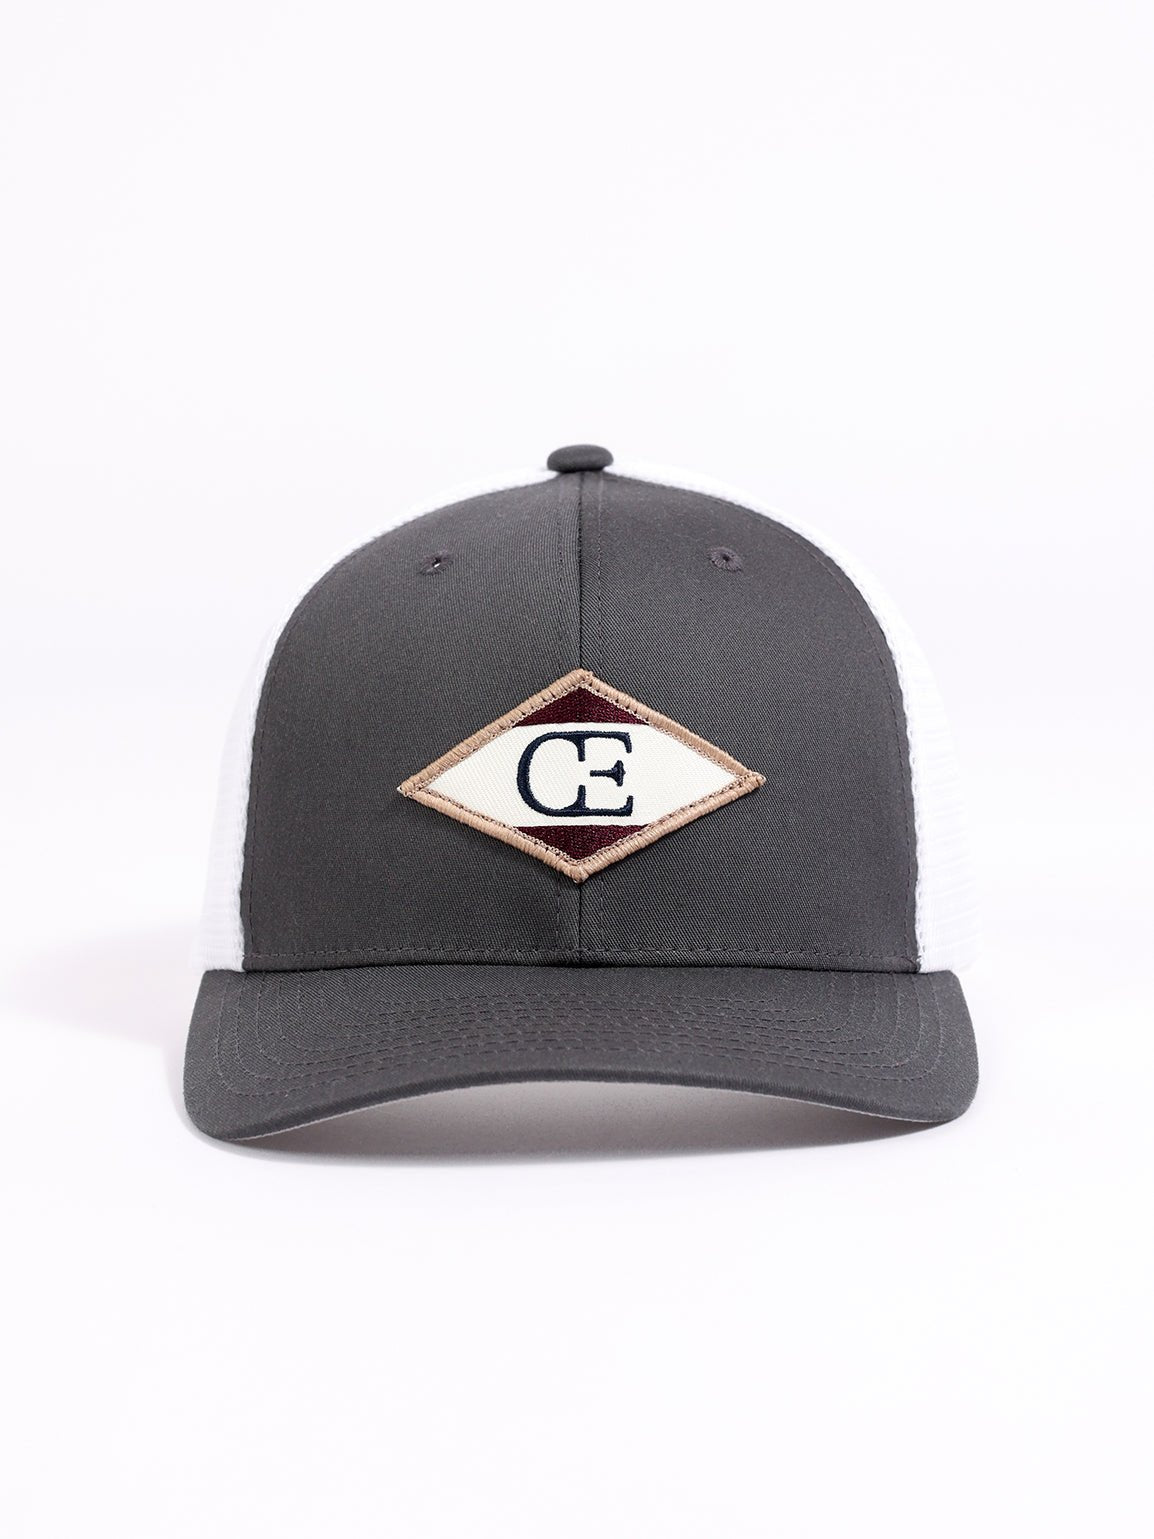 Studio shot of charcoal/white diamond mesh trucker hat |Color:Charcoal/White